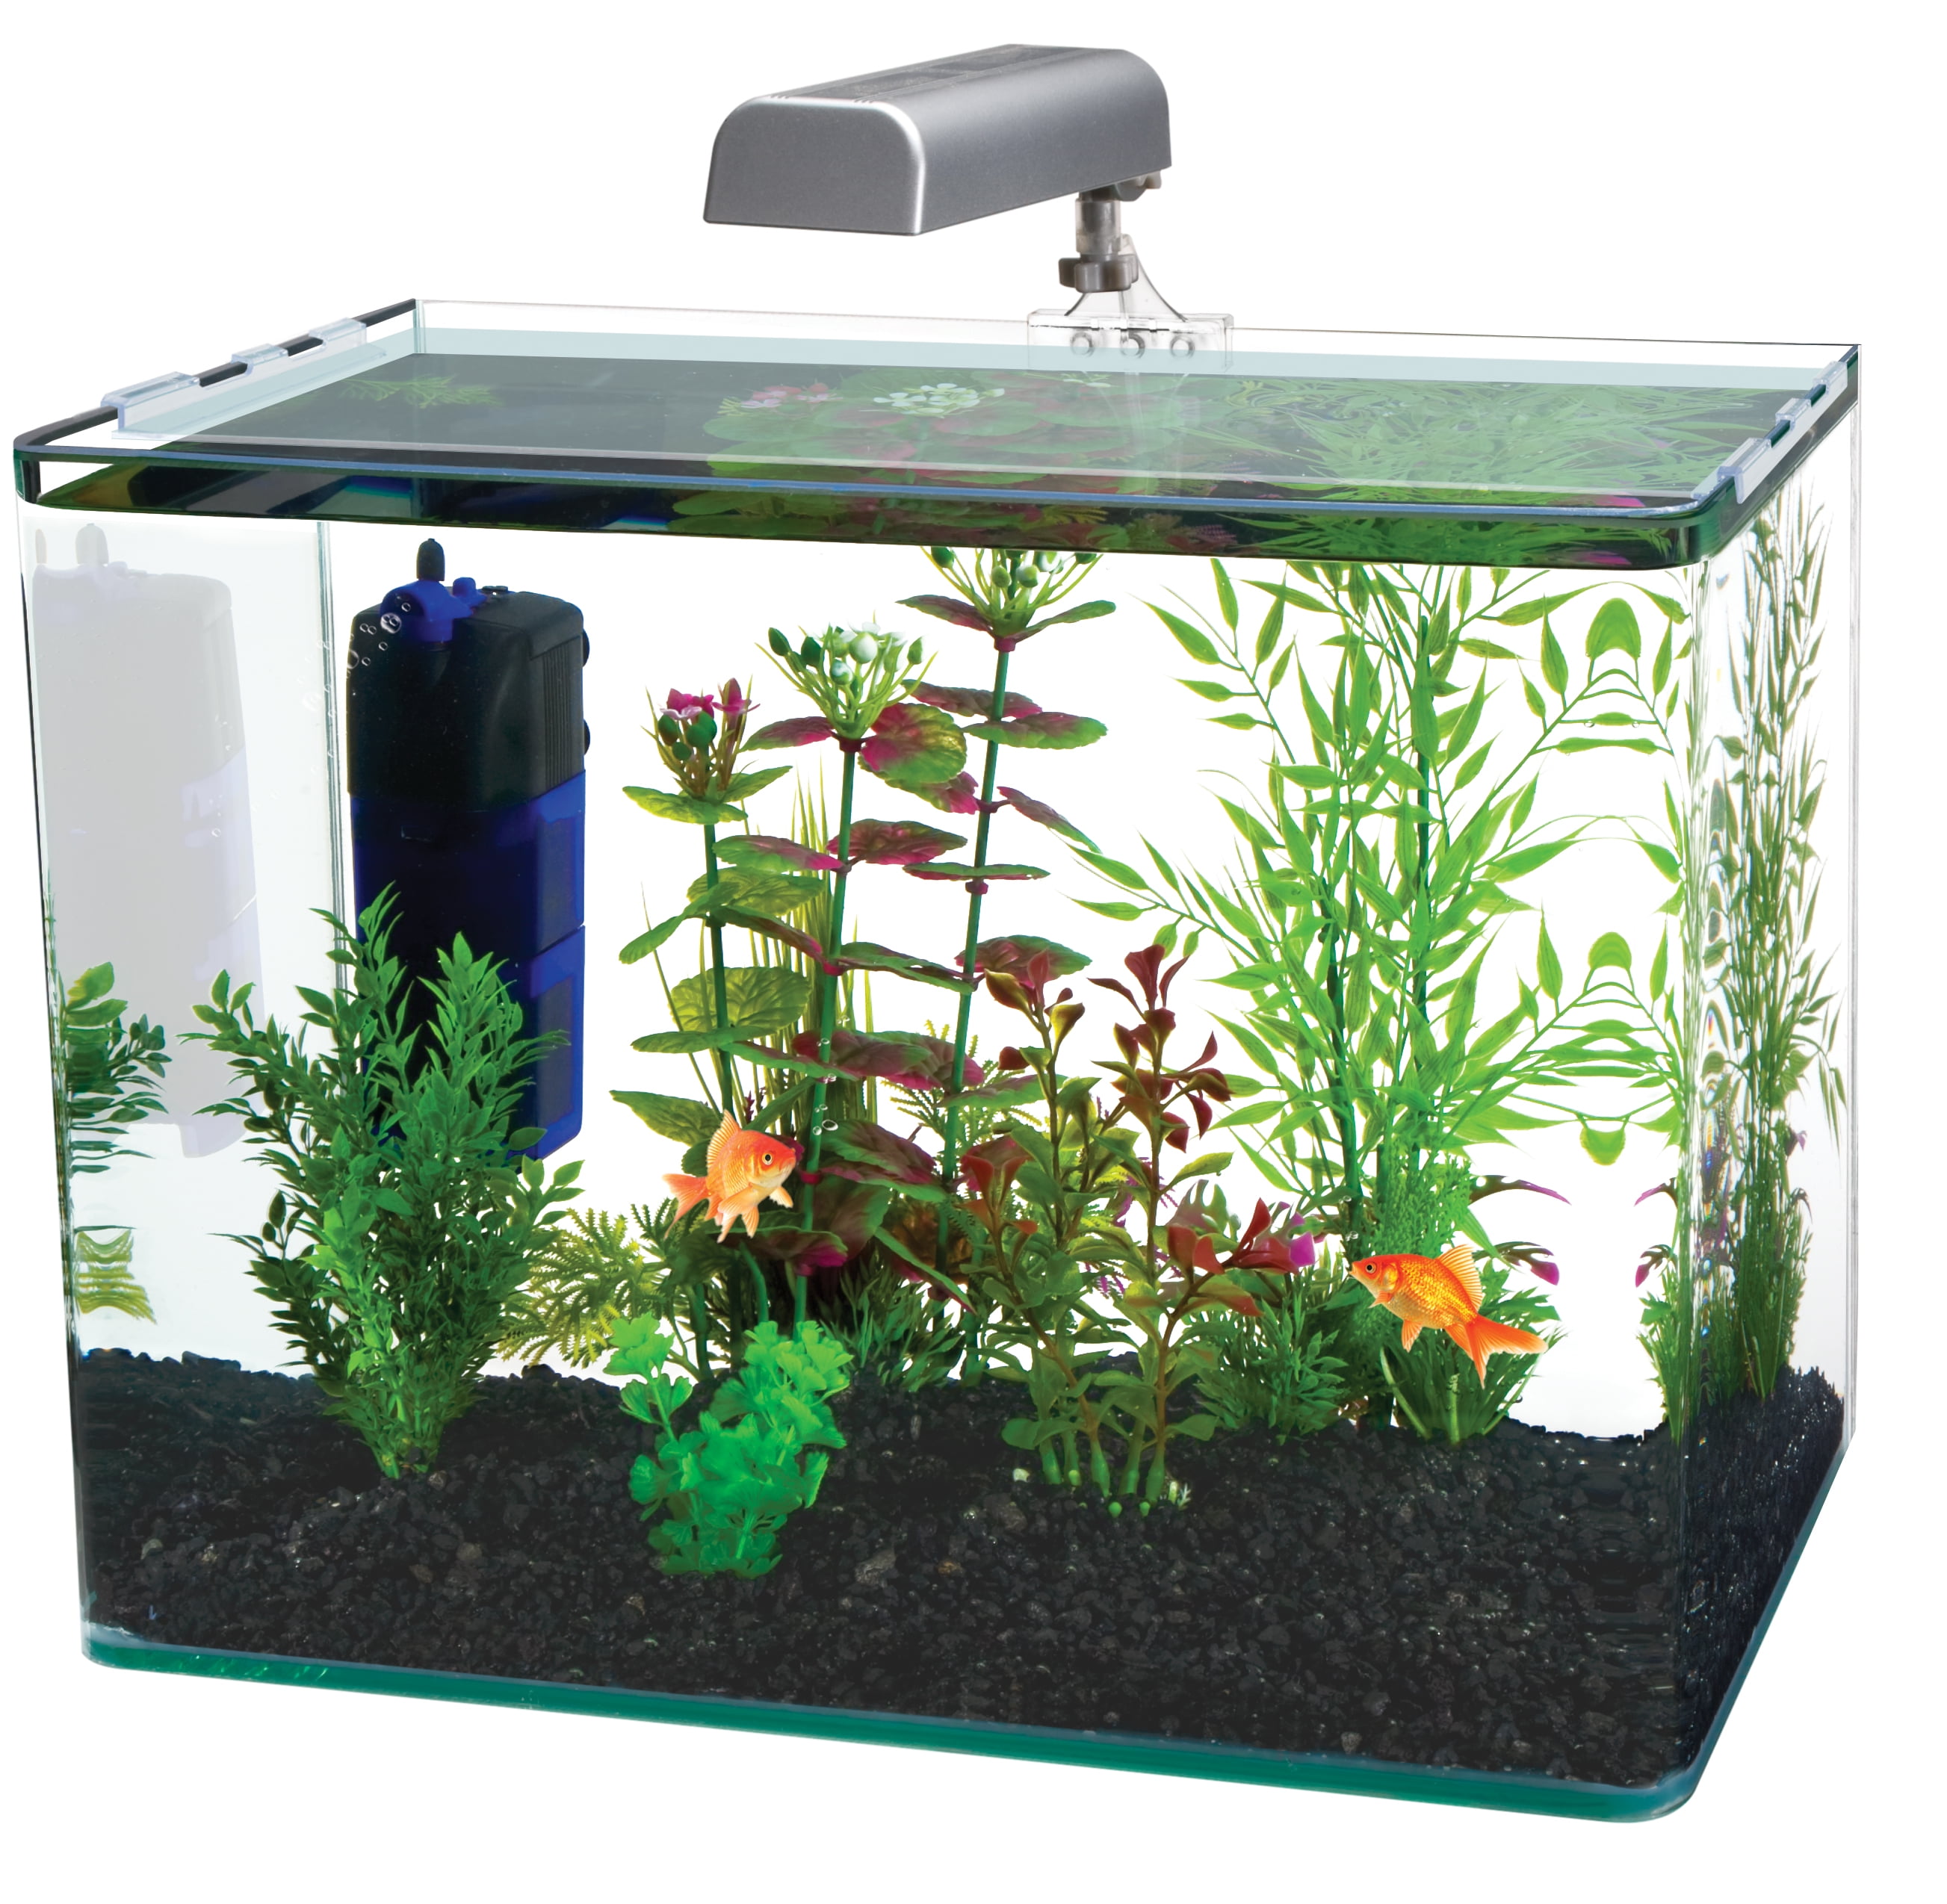 Penn-Plax Water-World Radius Desktop Aquarium Kit – 10 Gallon Tank